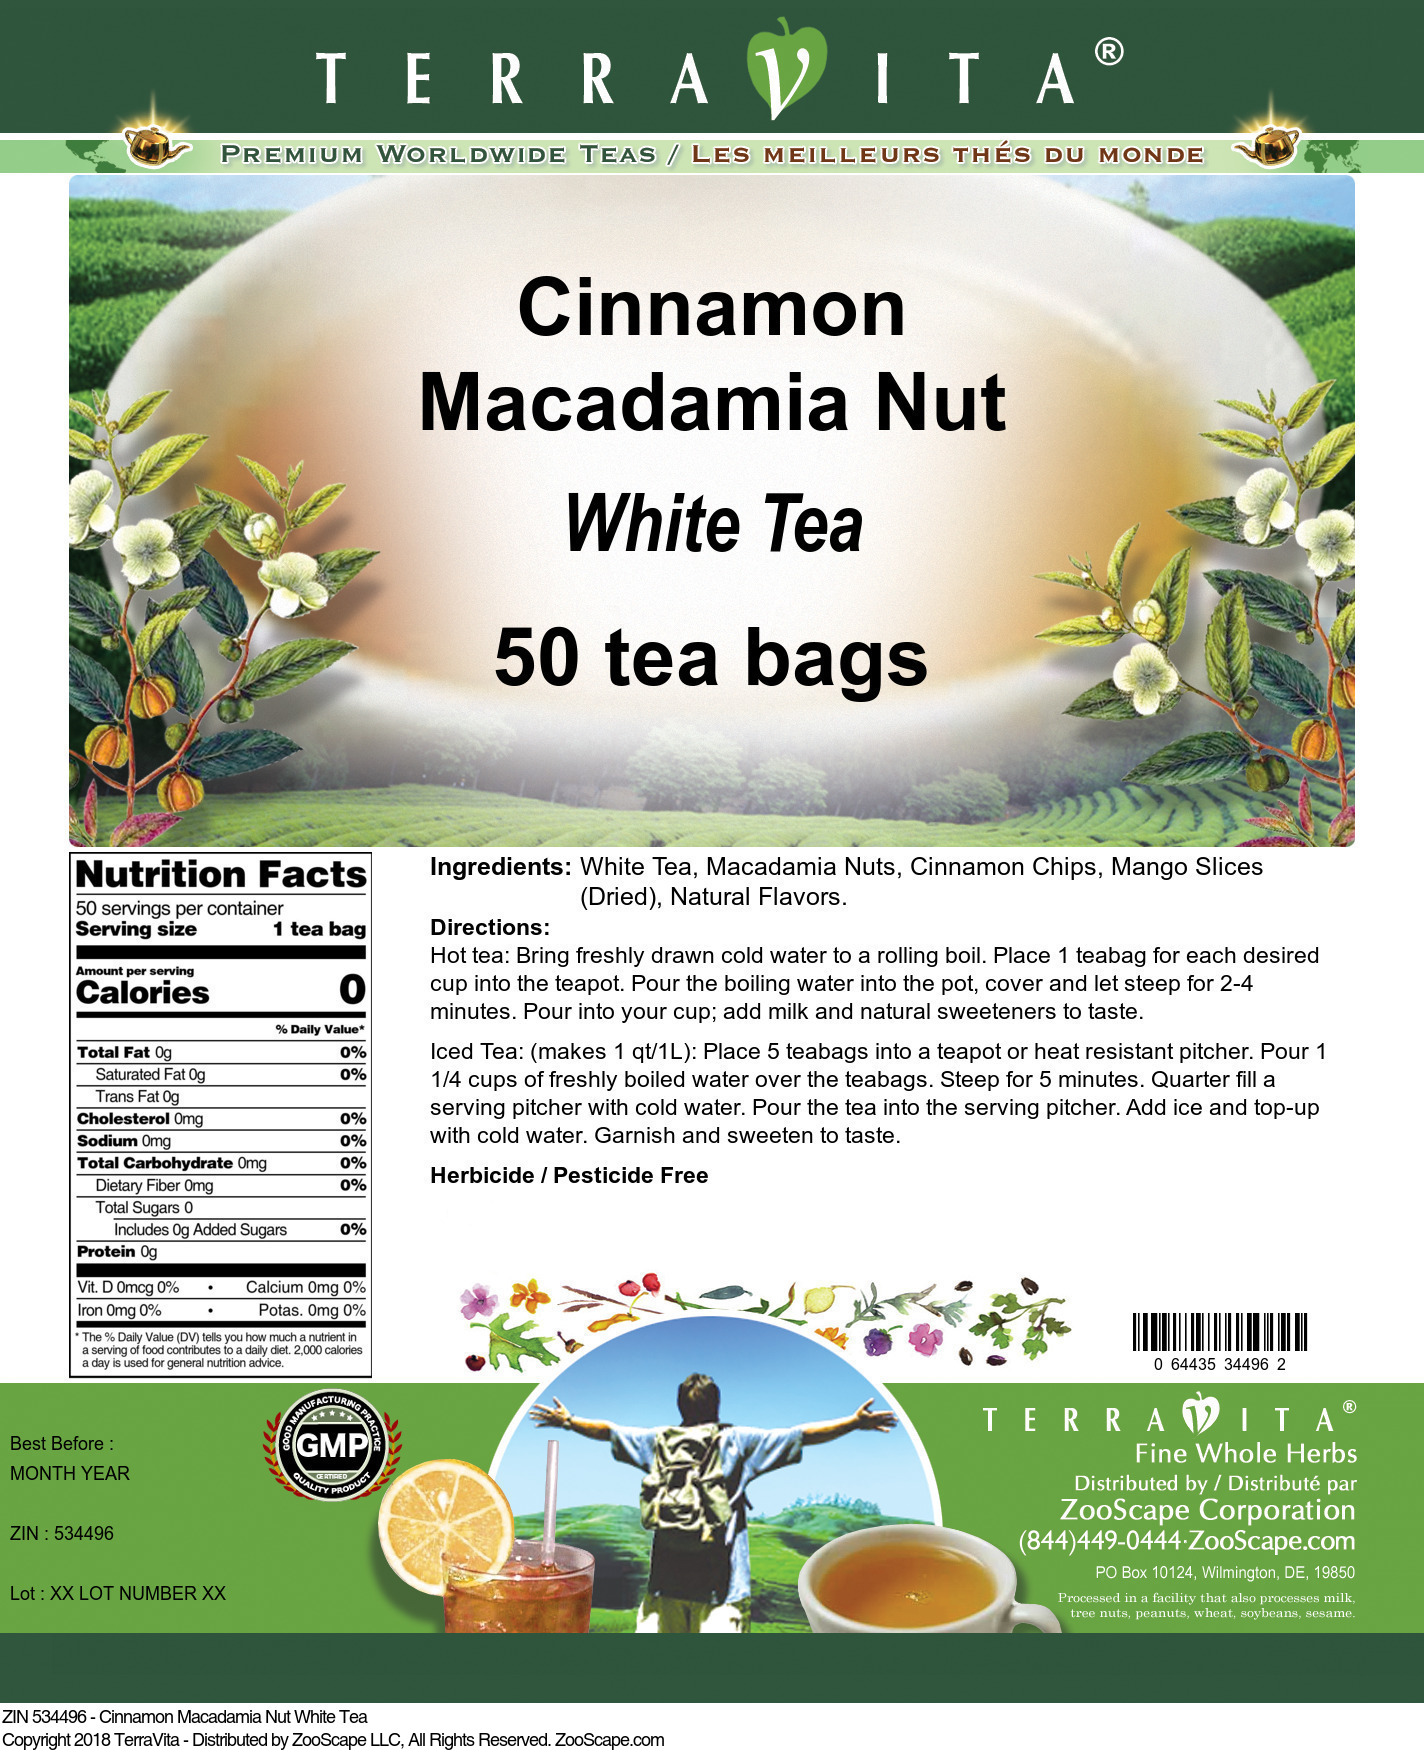 Cinnamon Macadamia Nut White Tea - Label